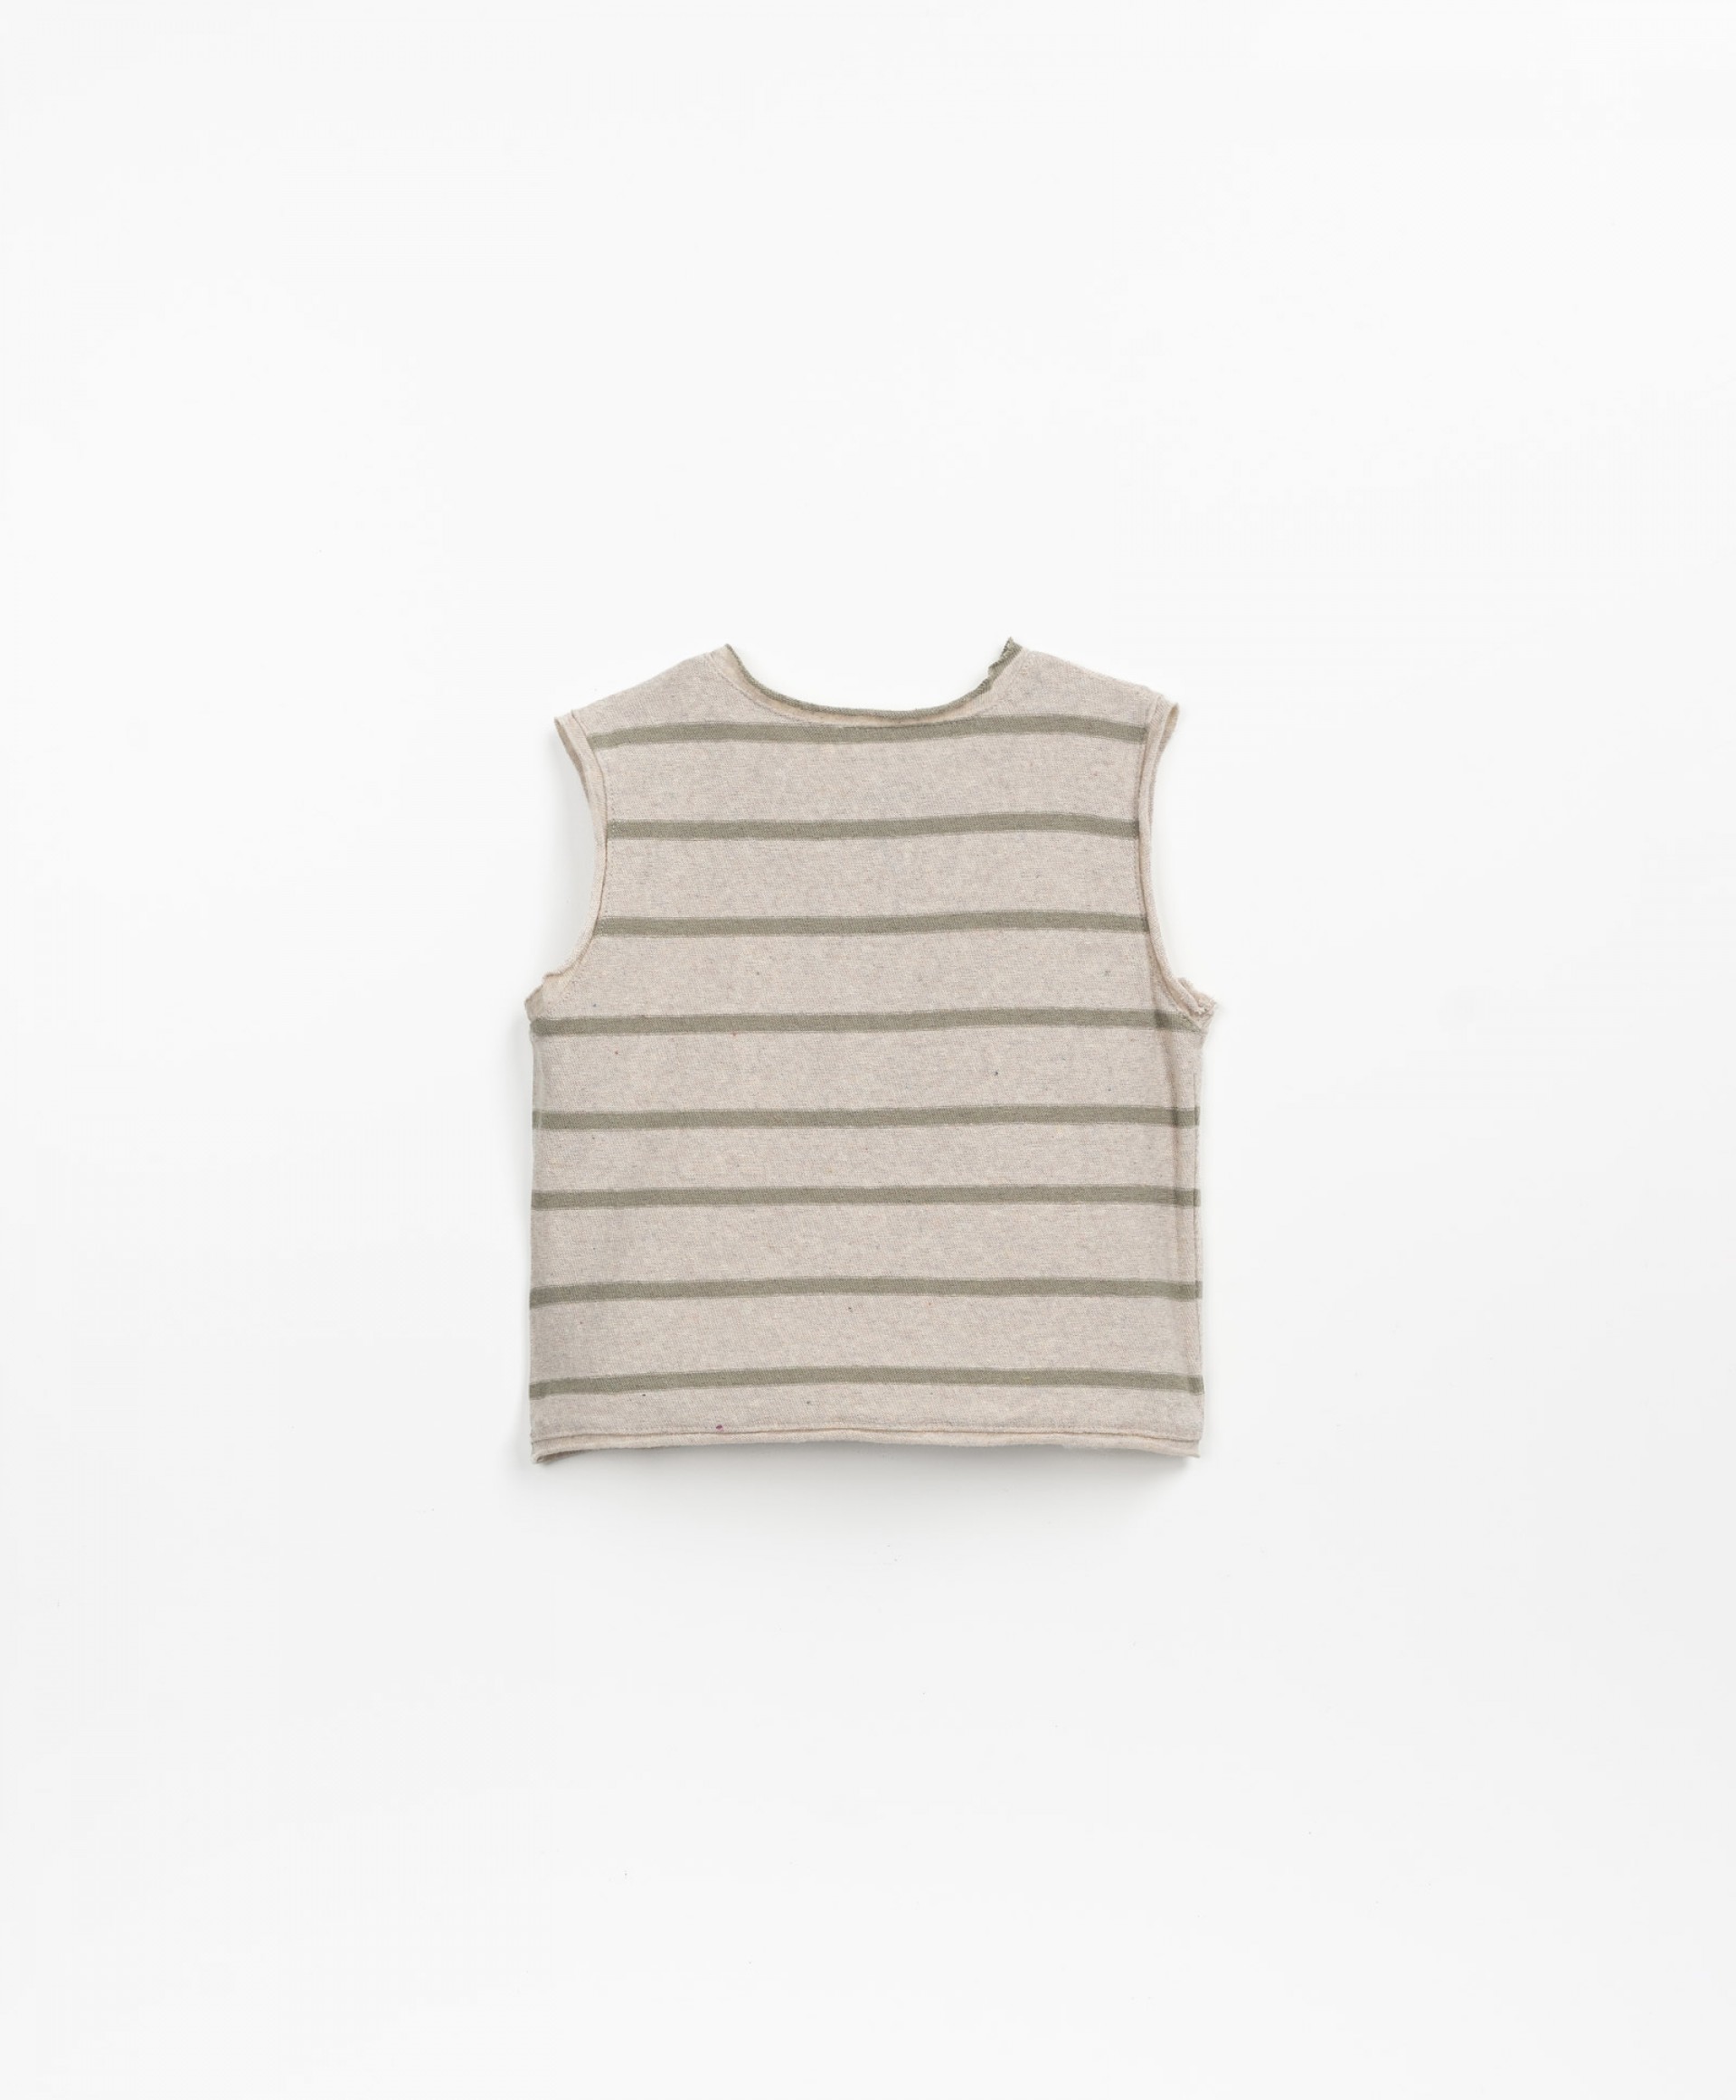 Camiseta sin mangas con fibras recicladas | Textile Art